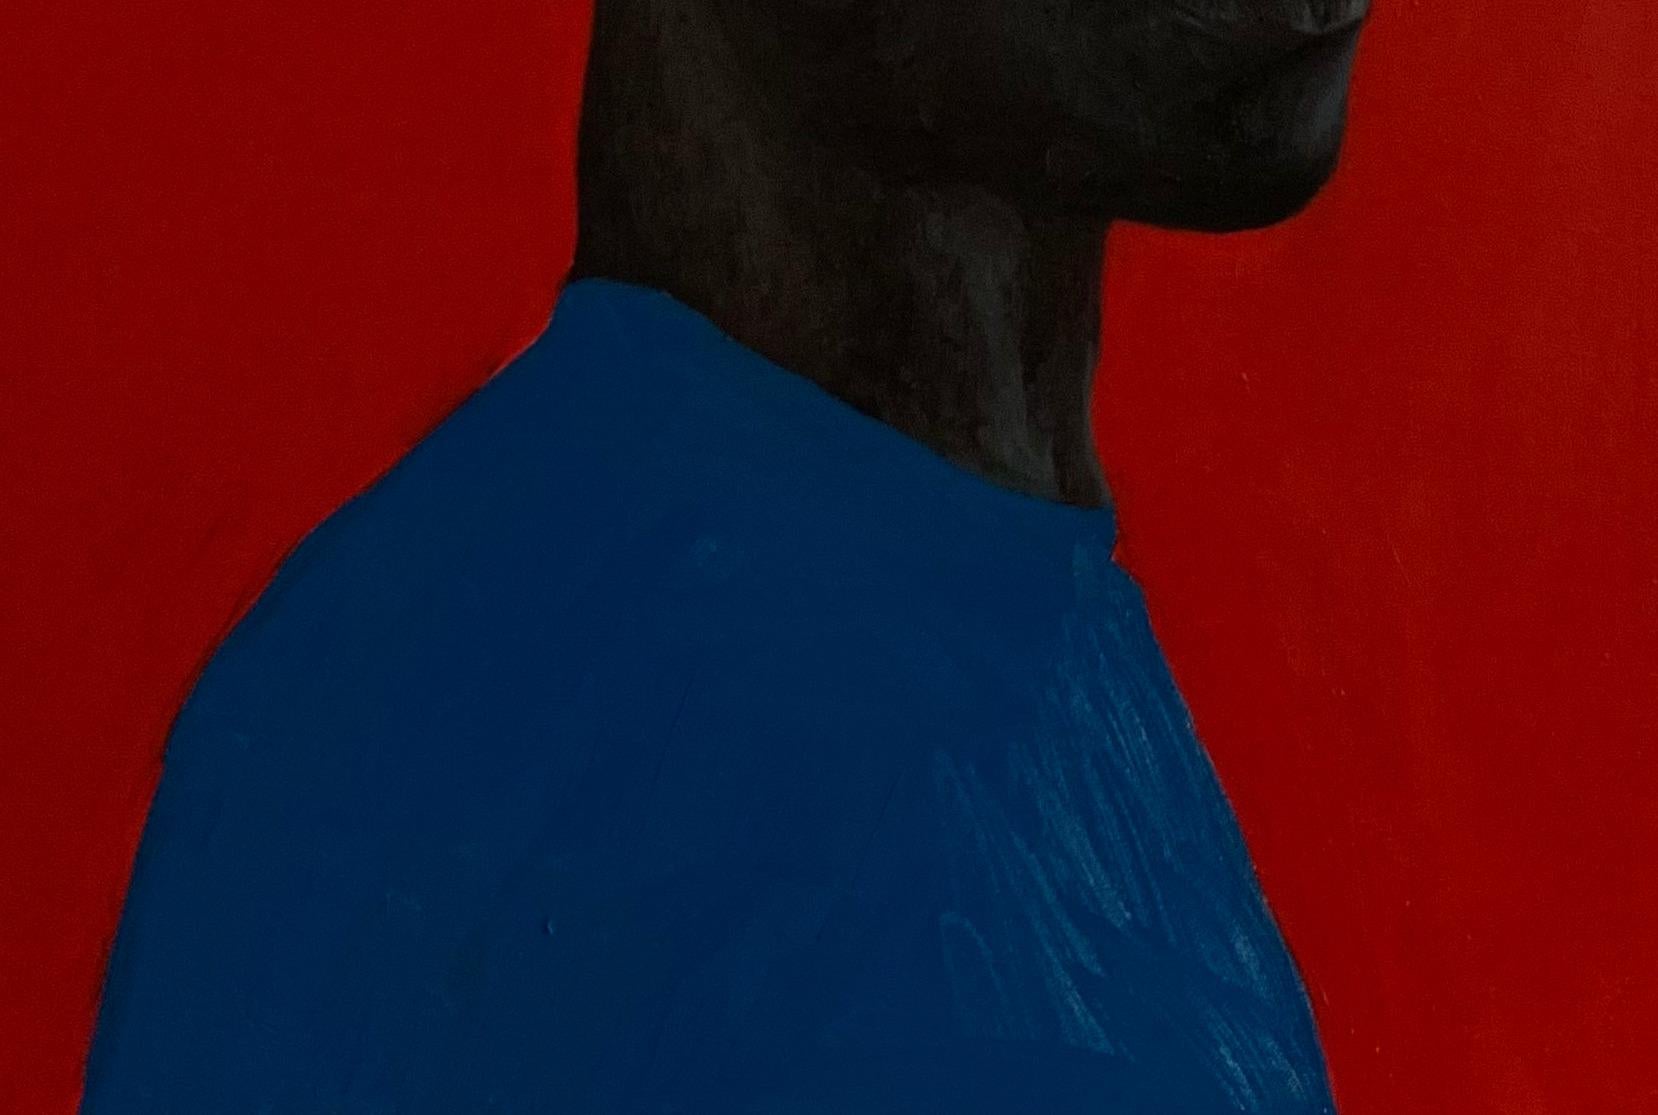 Ojulari I (Zeitgenössisch), Painting, von Emmanuel Ojebola